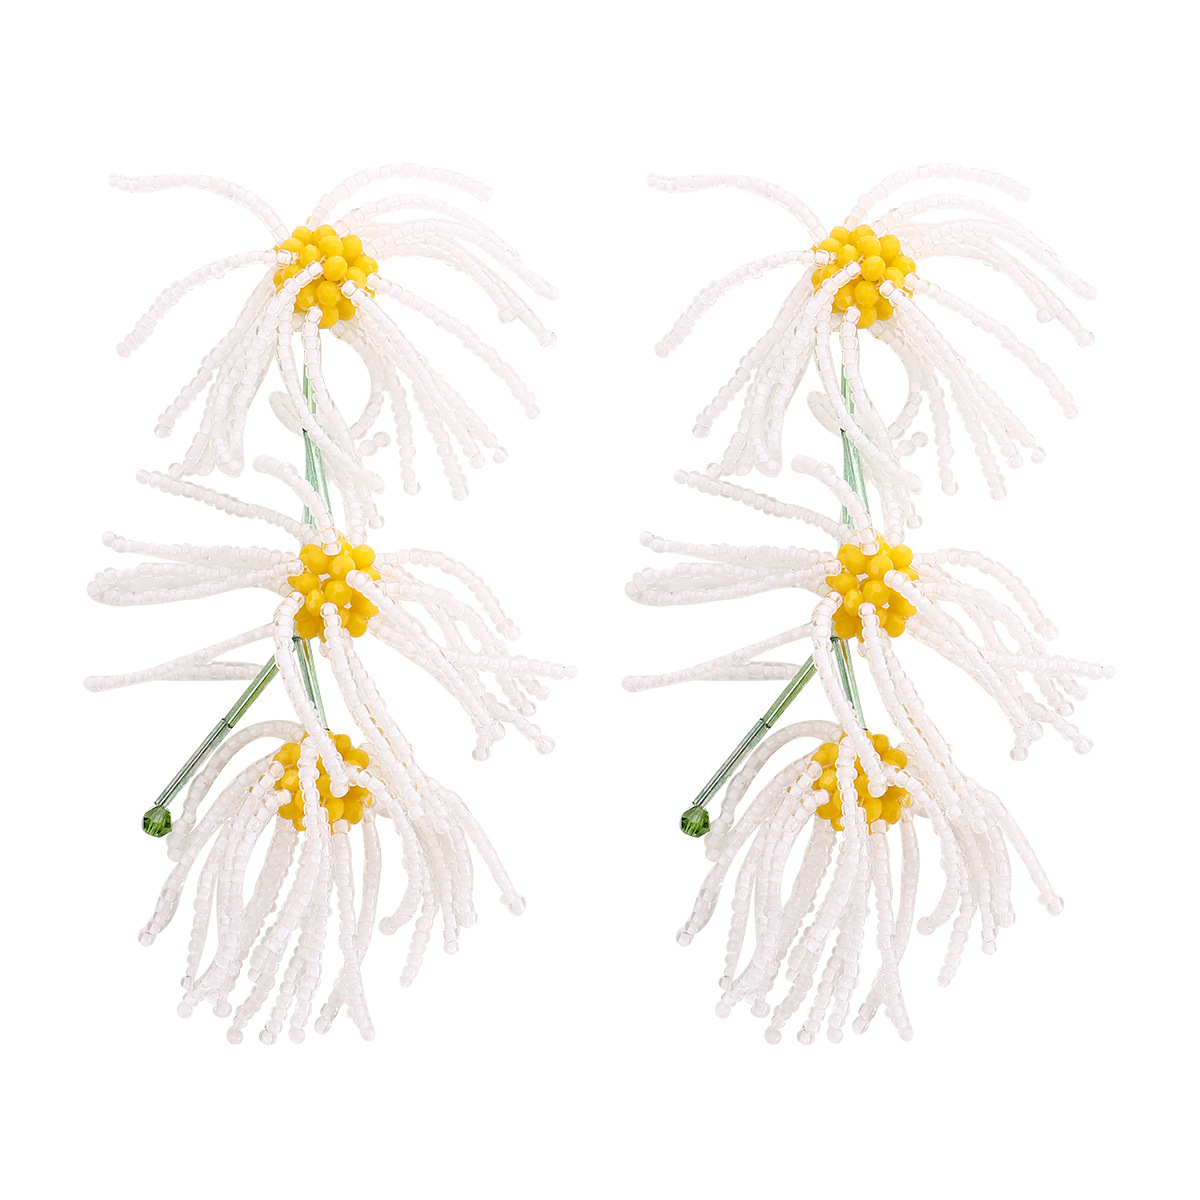 1:White flower style